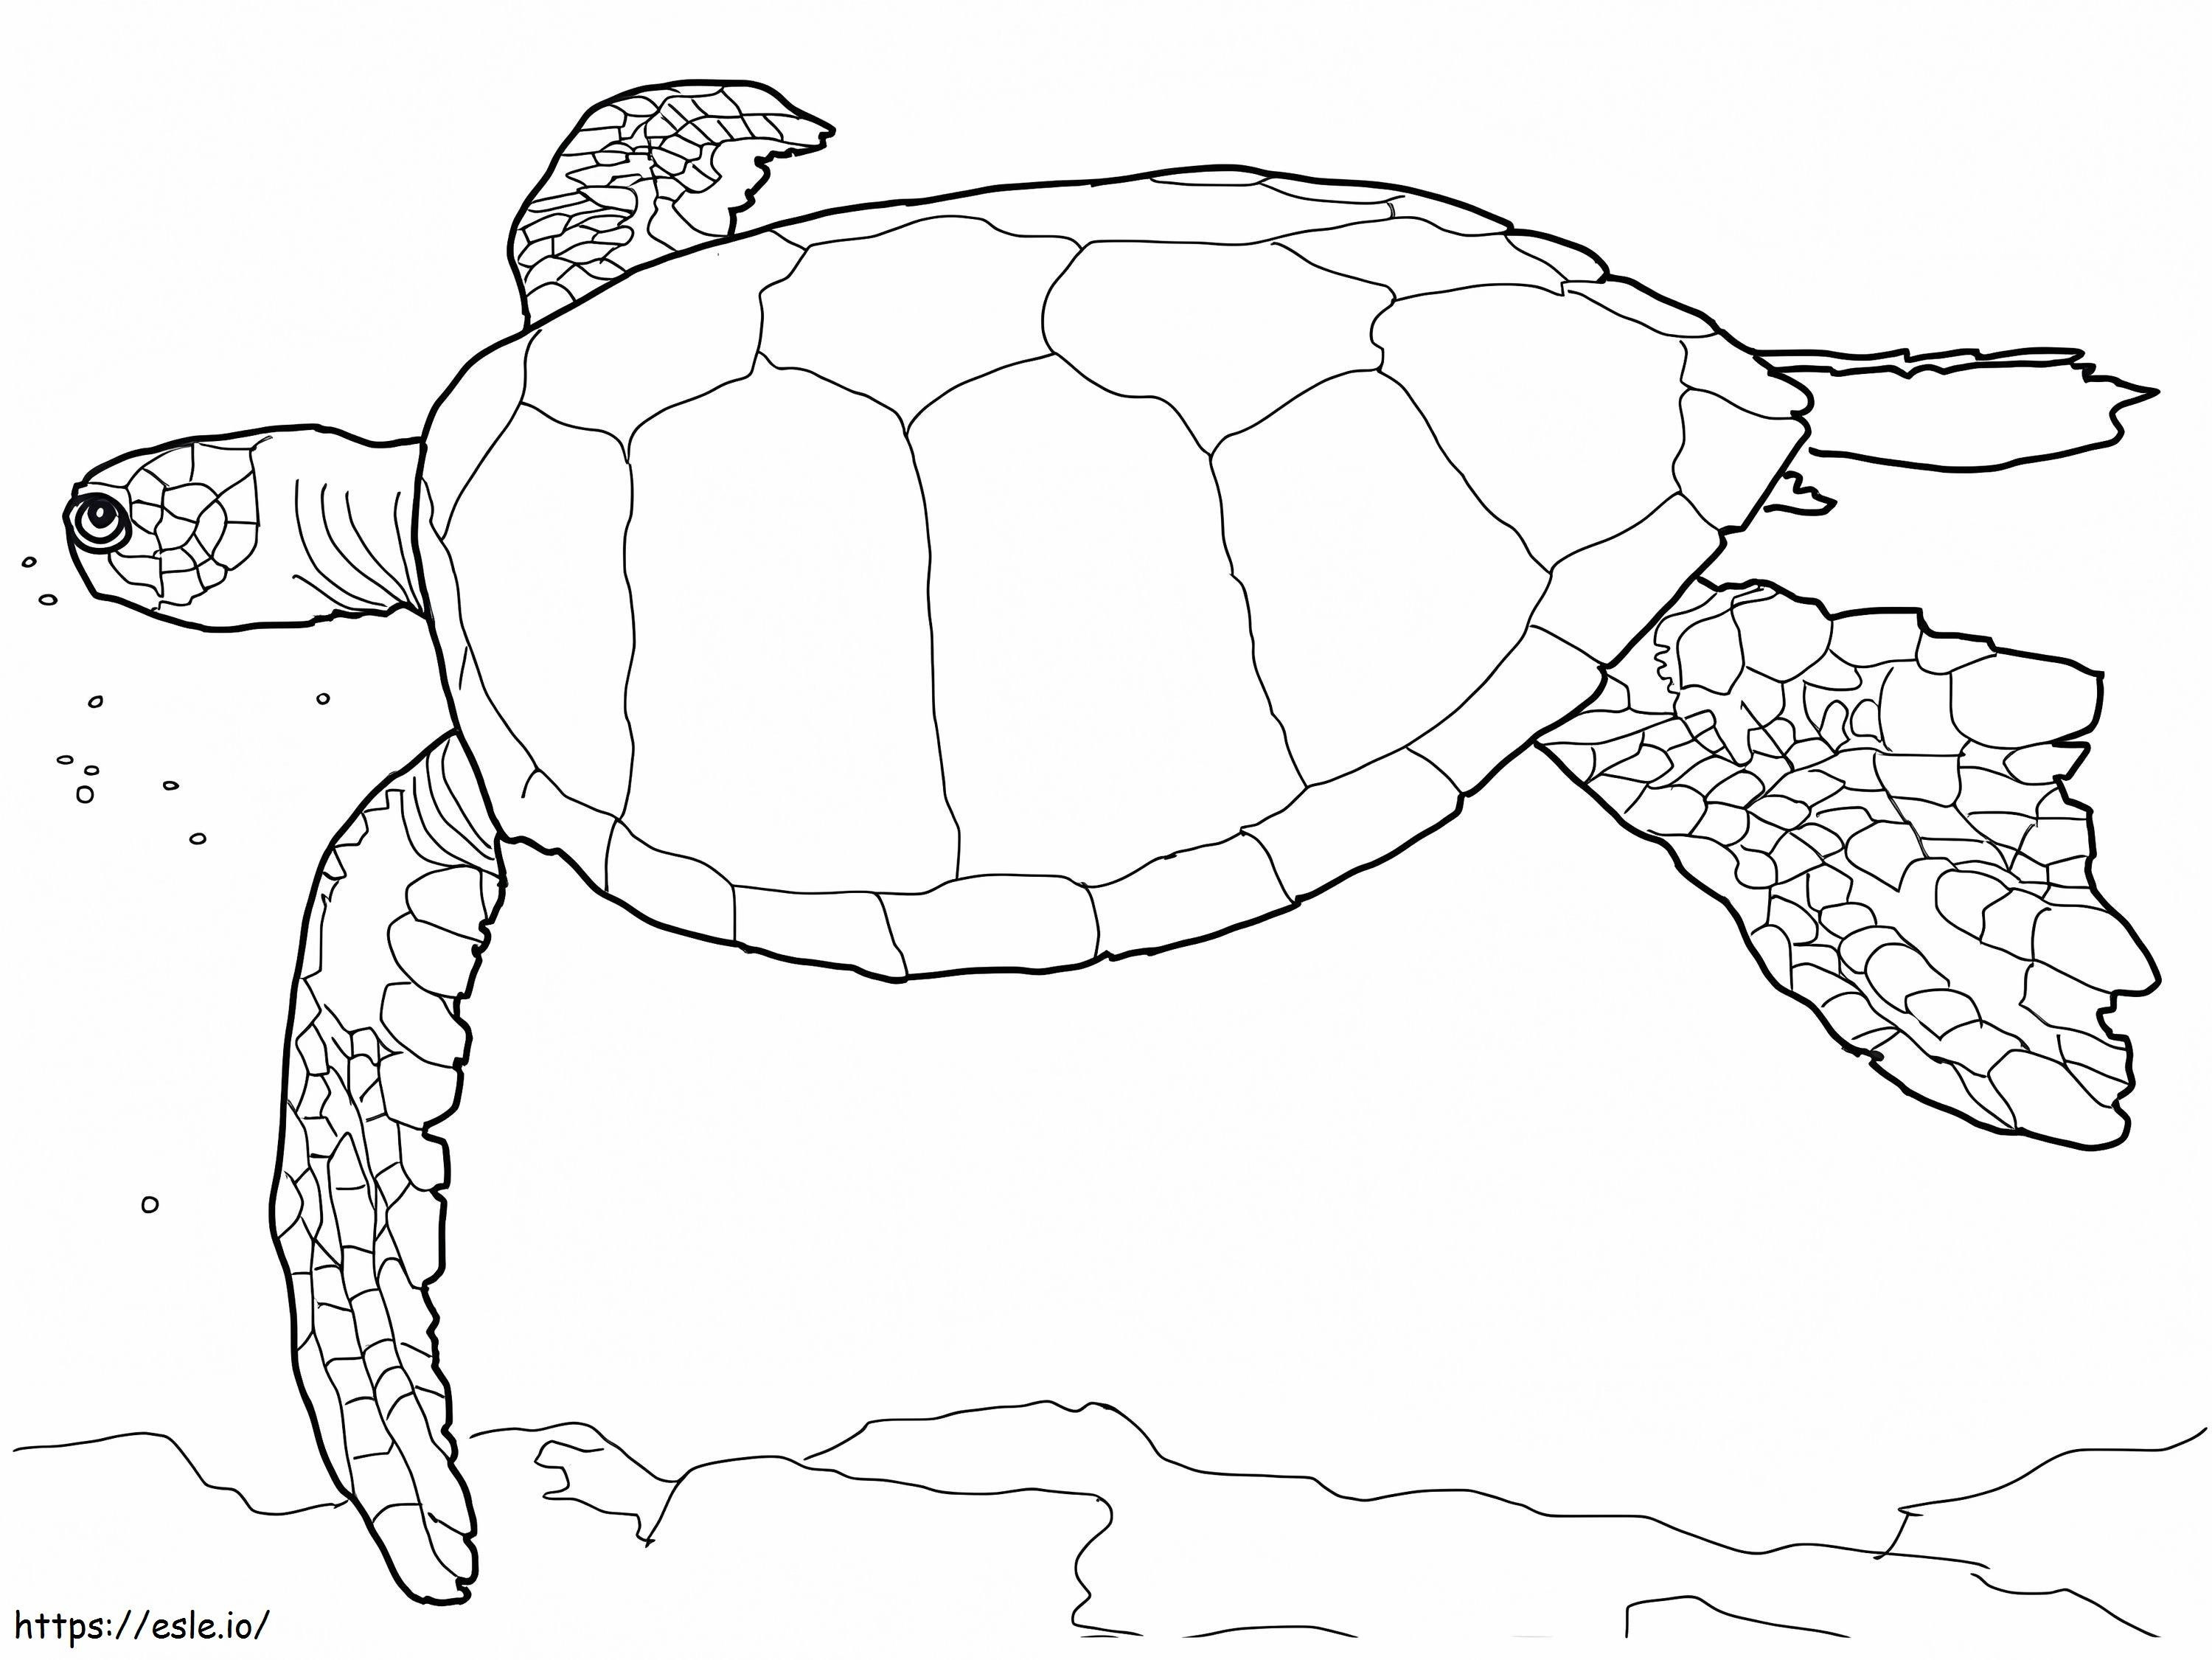 Hawaiian Green Turtle coloring page